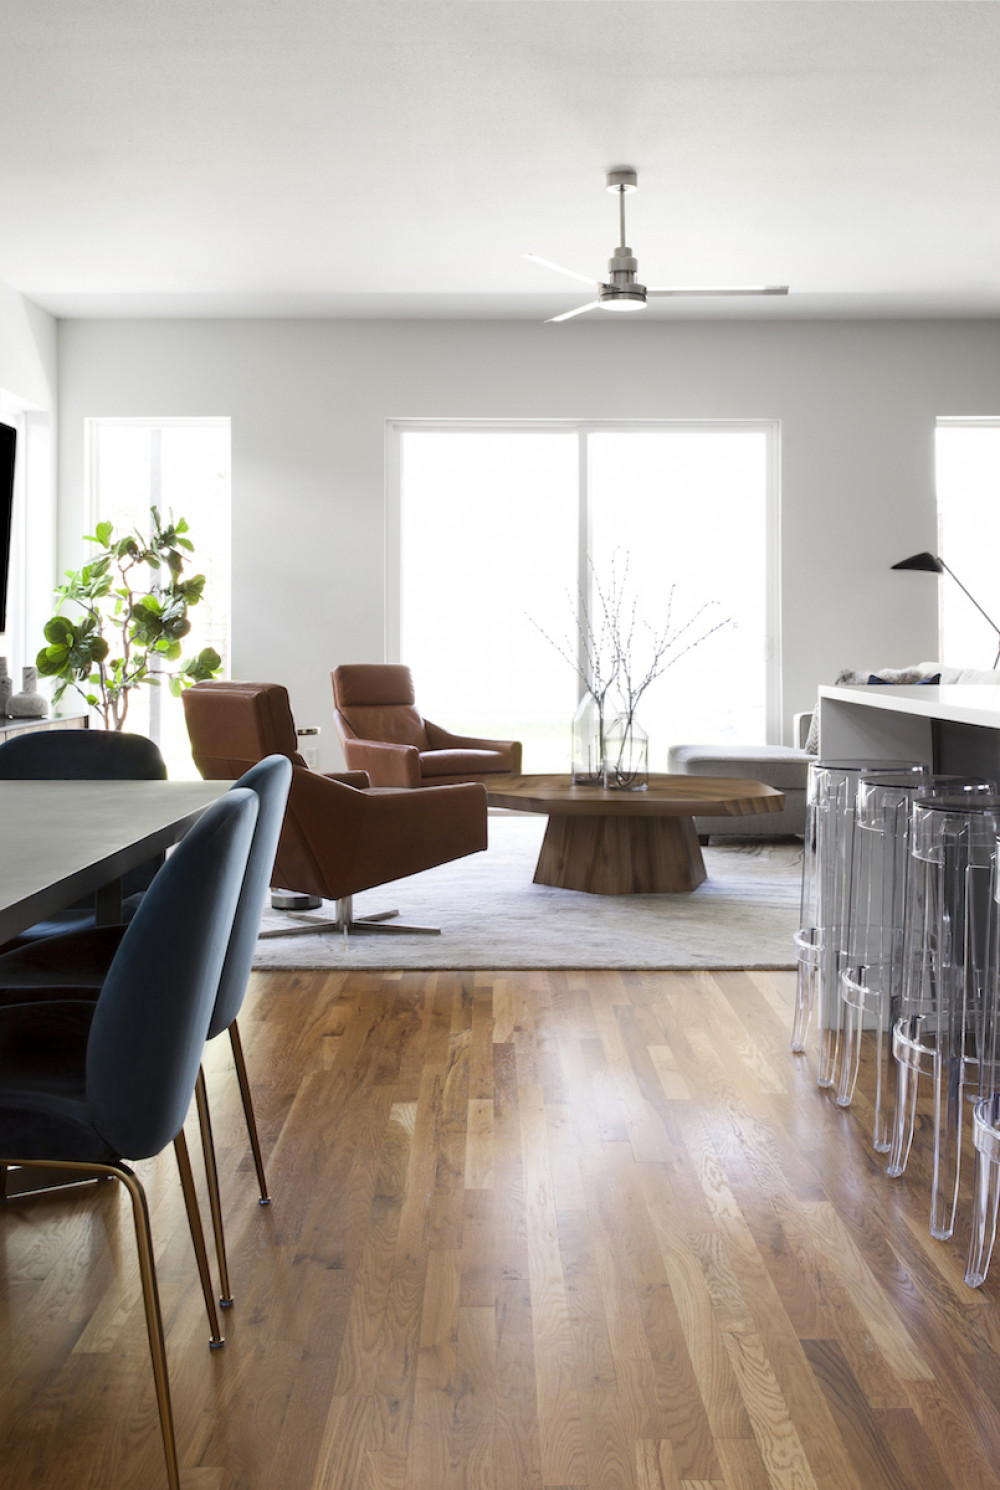 living-room-kitchen-dining-table-interior-design